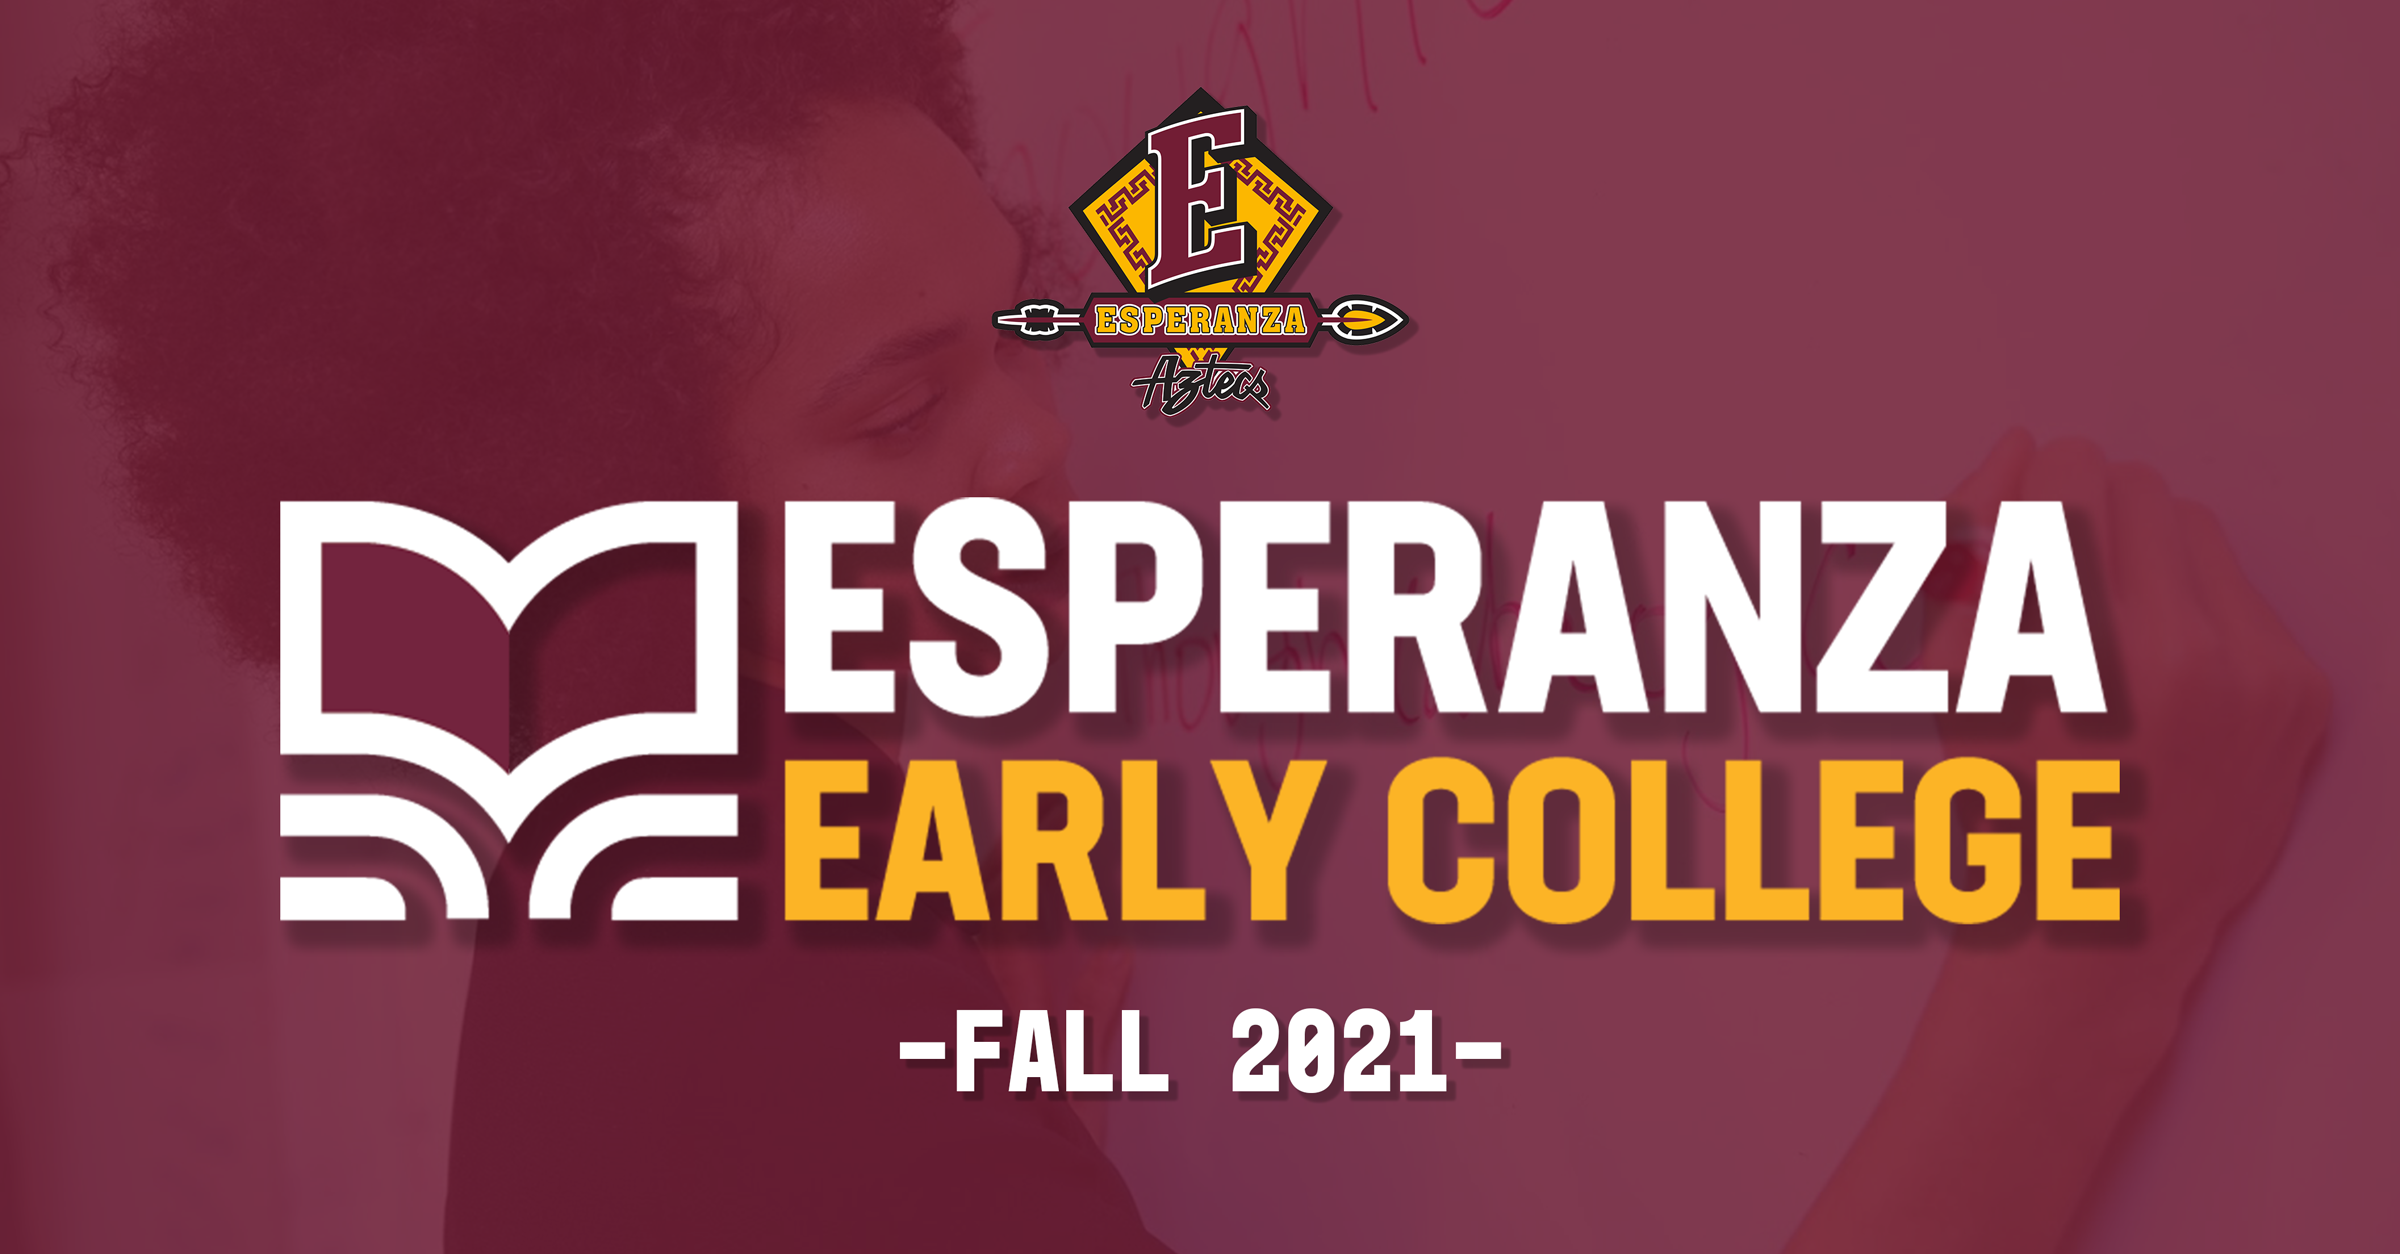 Esperanza Early College logo.